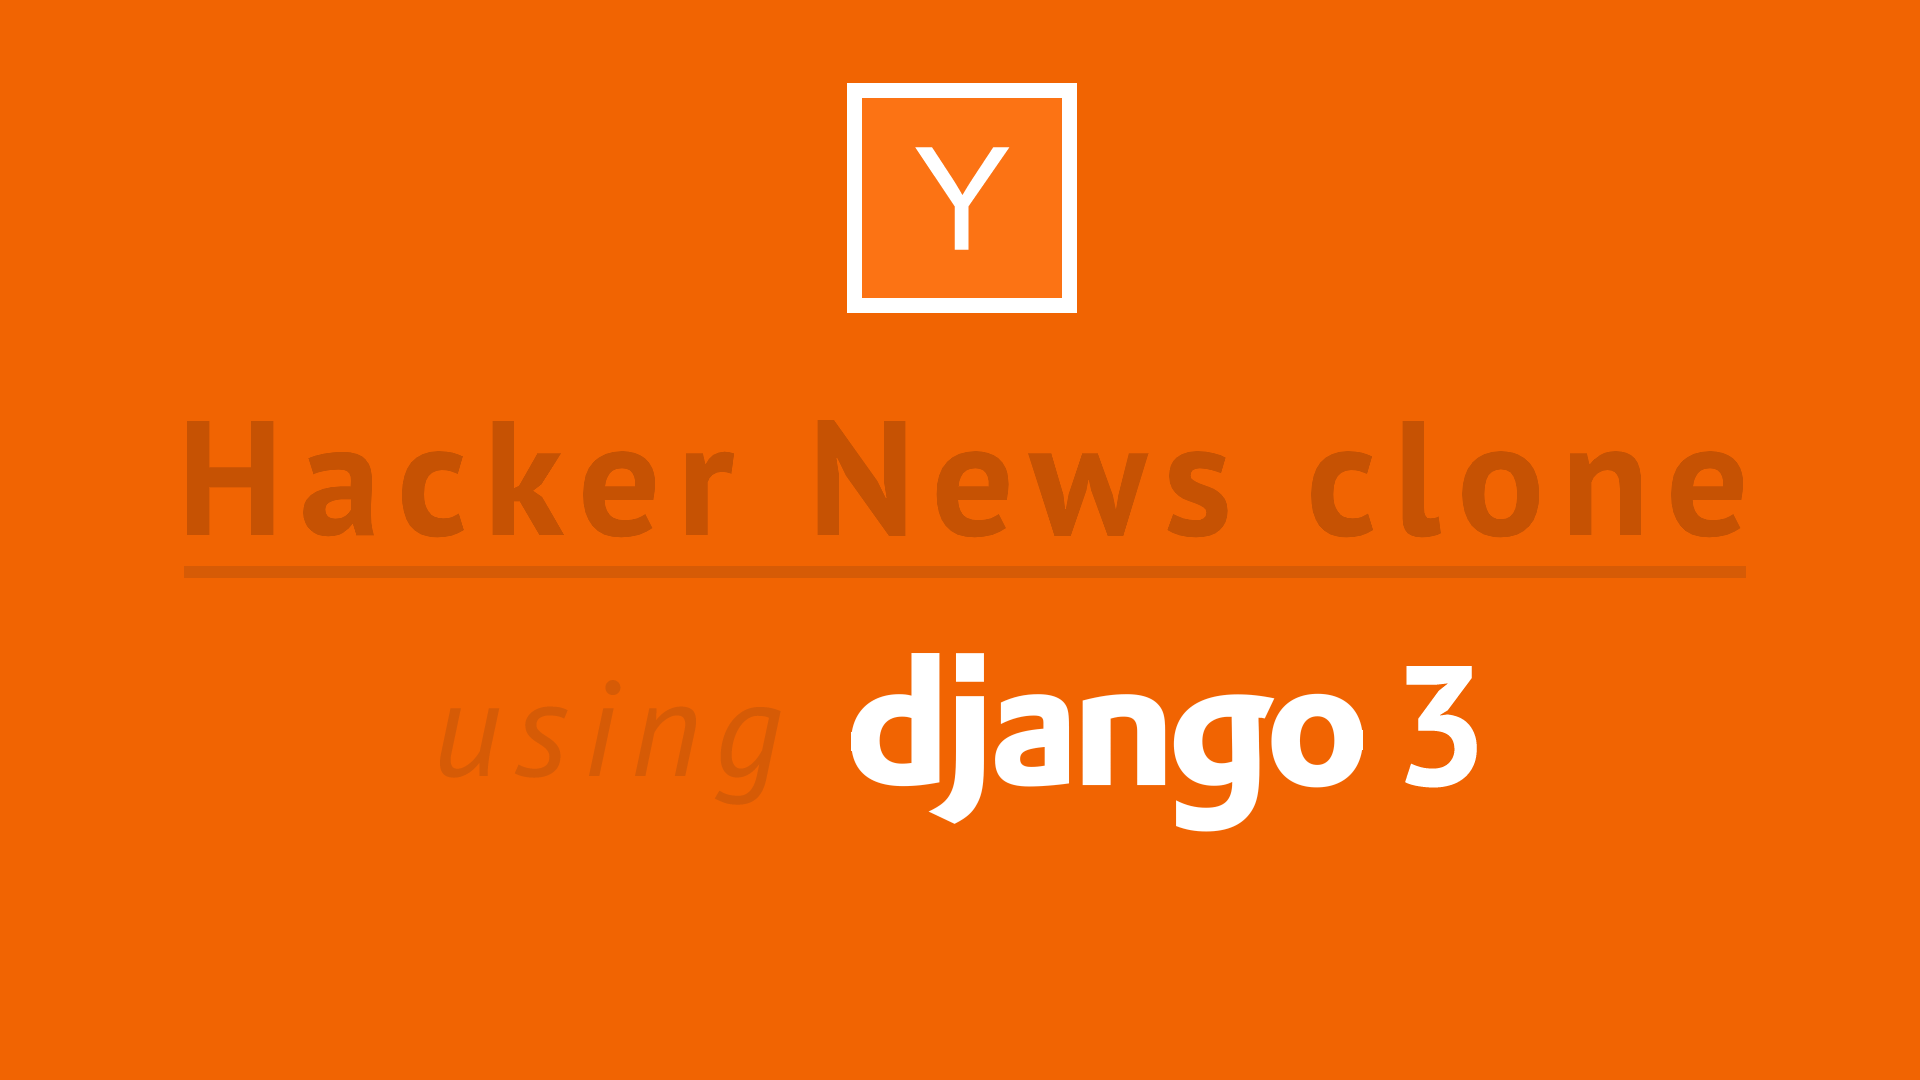 How to build a simple hacker news clone using Django